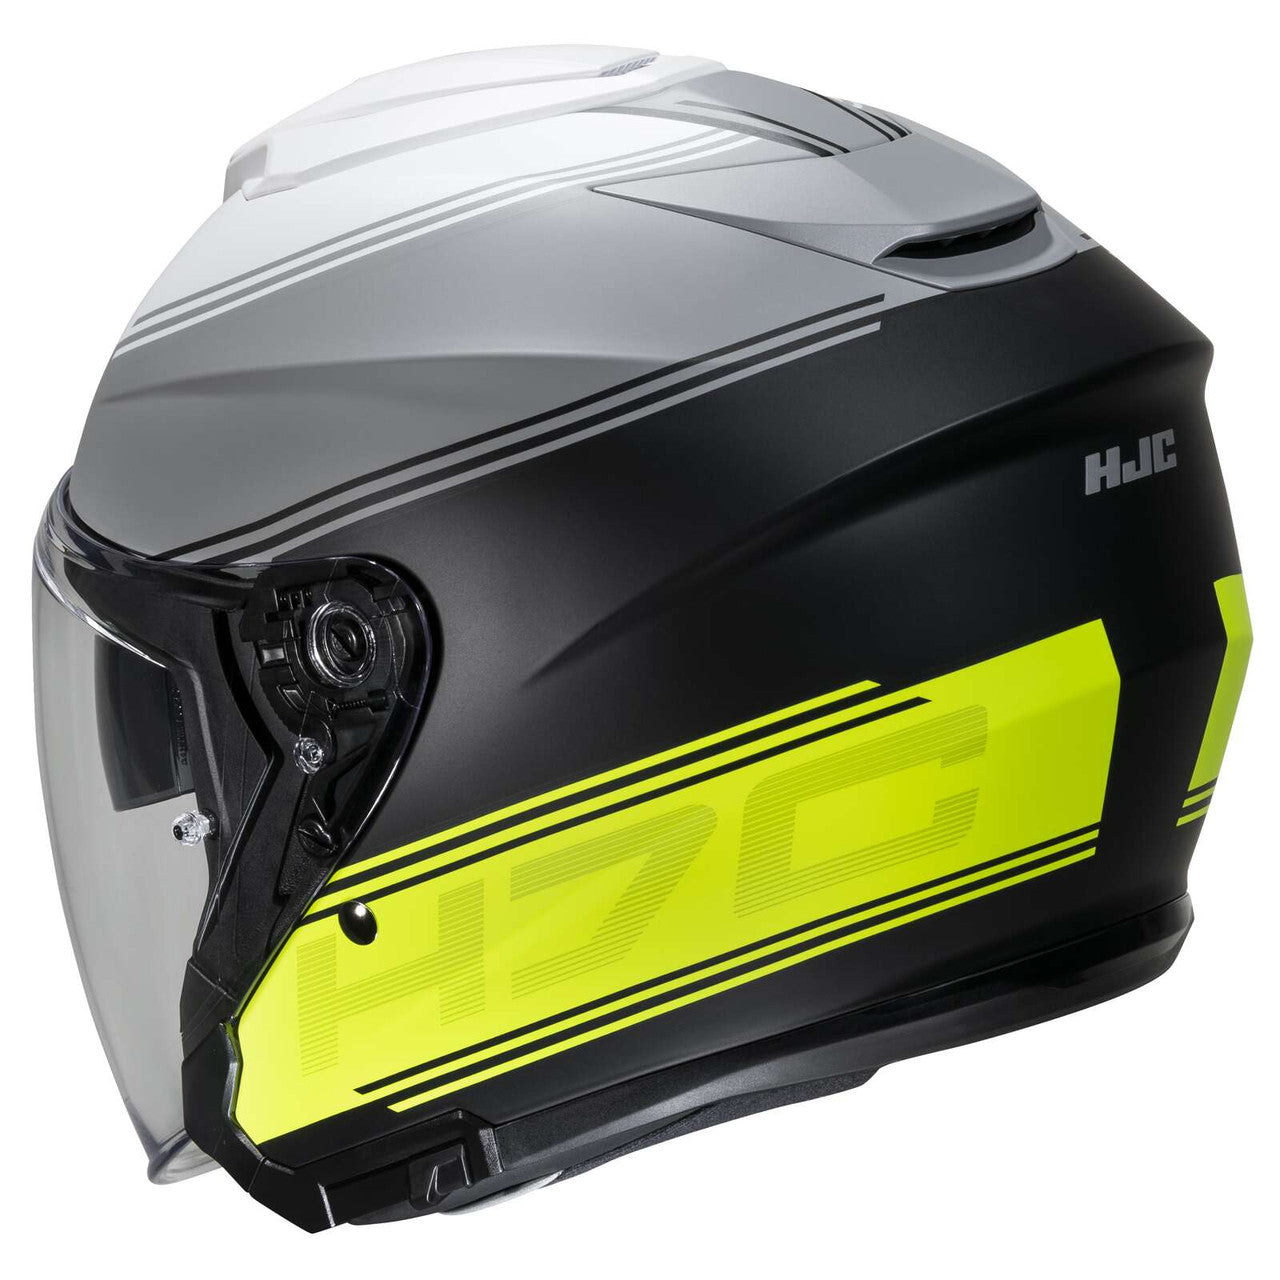 HJC-i30-Vicom-Open-Face-Motorcycle-Helmet-Grey-Black-Hi-Viz-rear-view